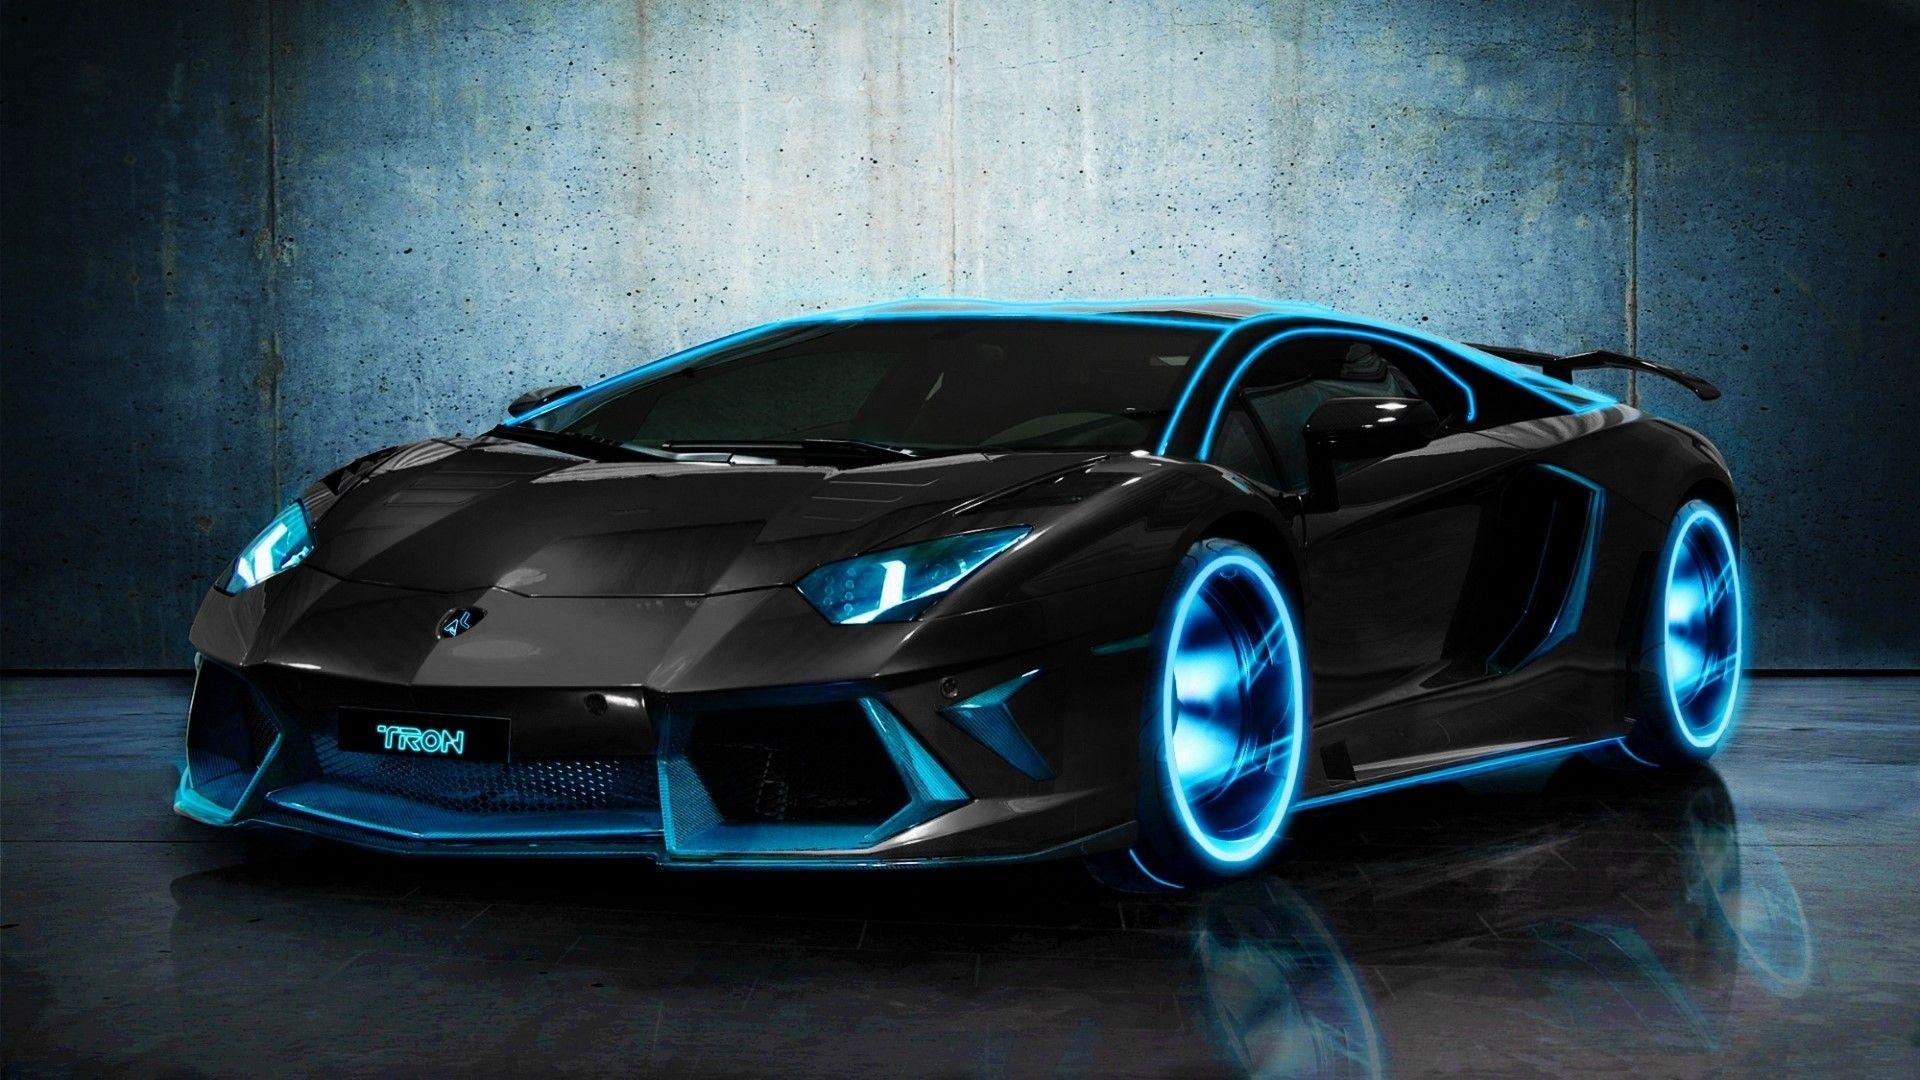 Lamborghini Cars Wallpaper. Free Download HD Latest Motors Image